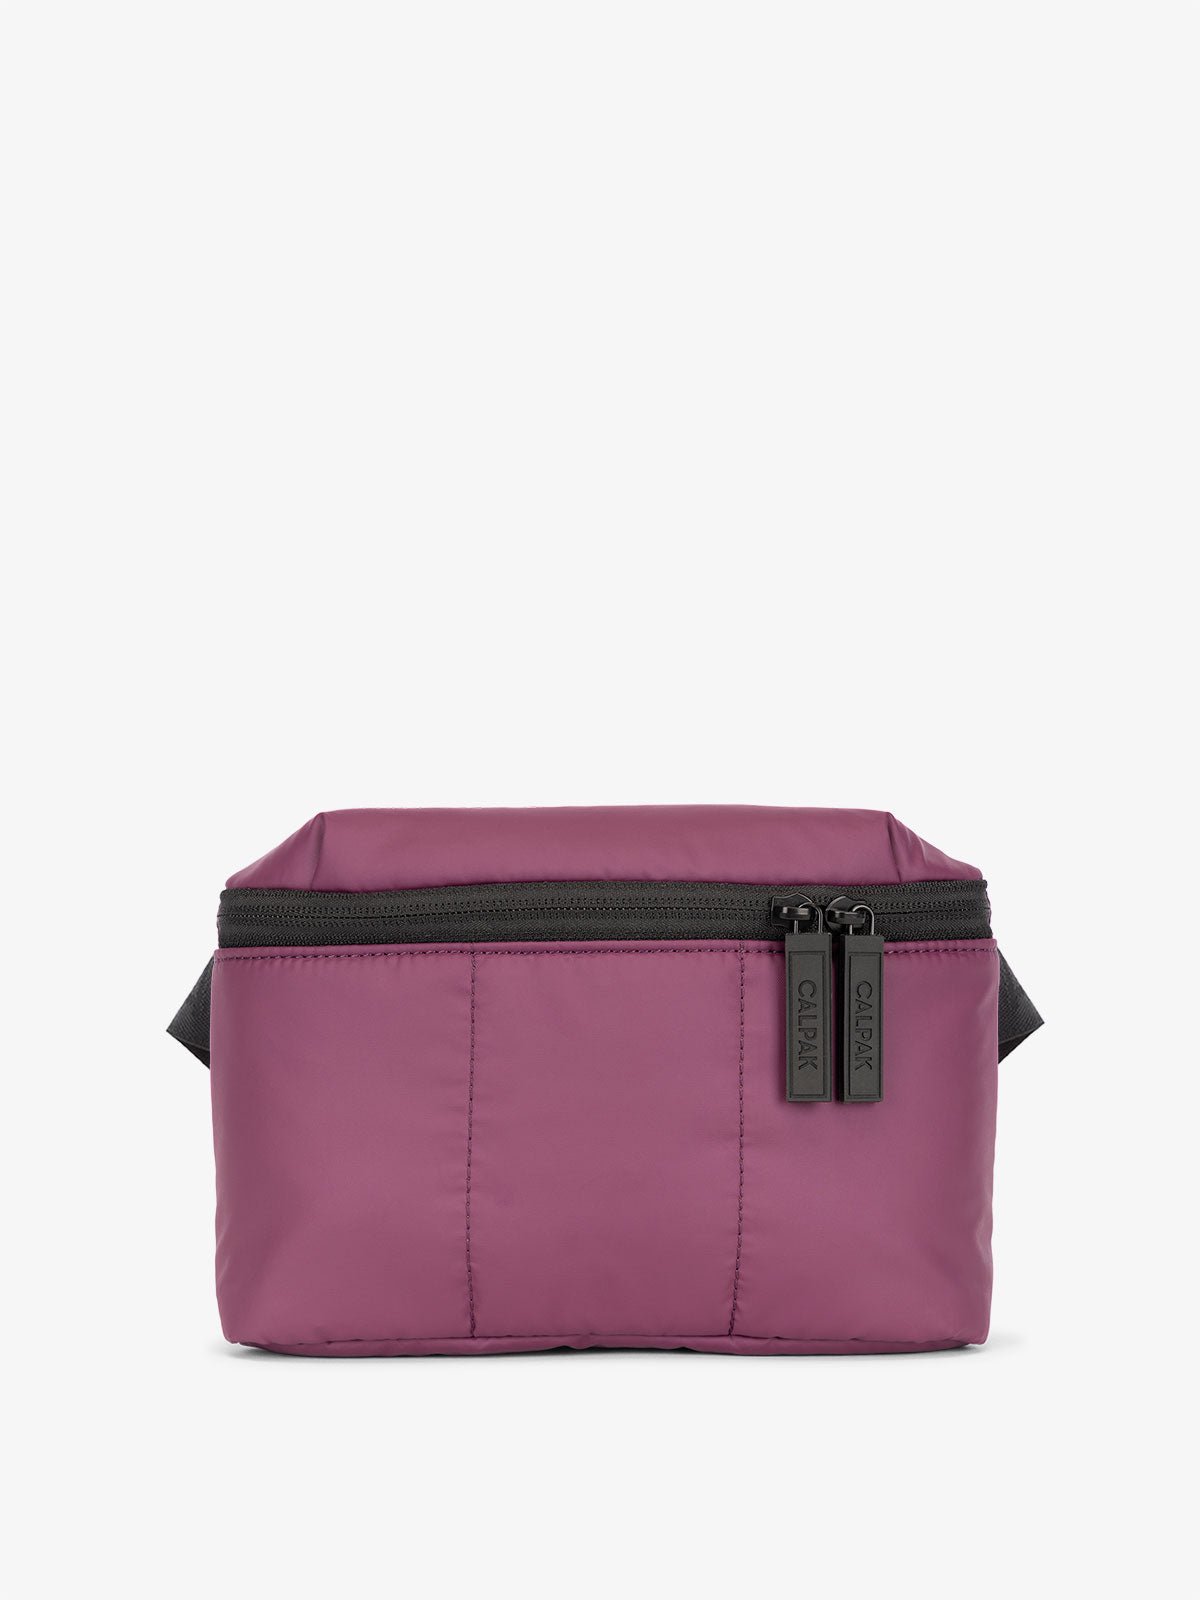 CALPAK Luka Mini Belt Bag with soft puffy exterior in purple plum